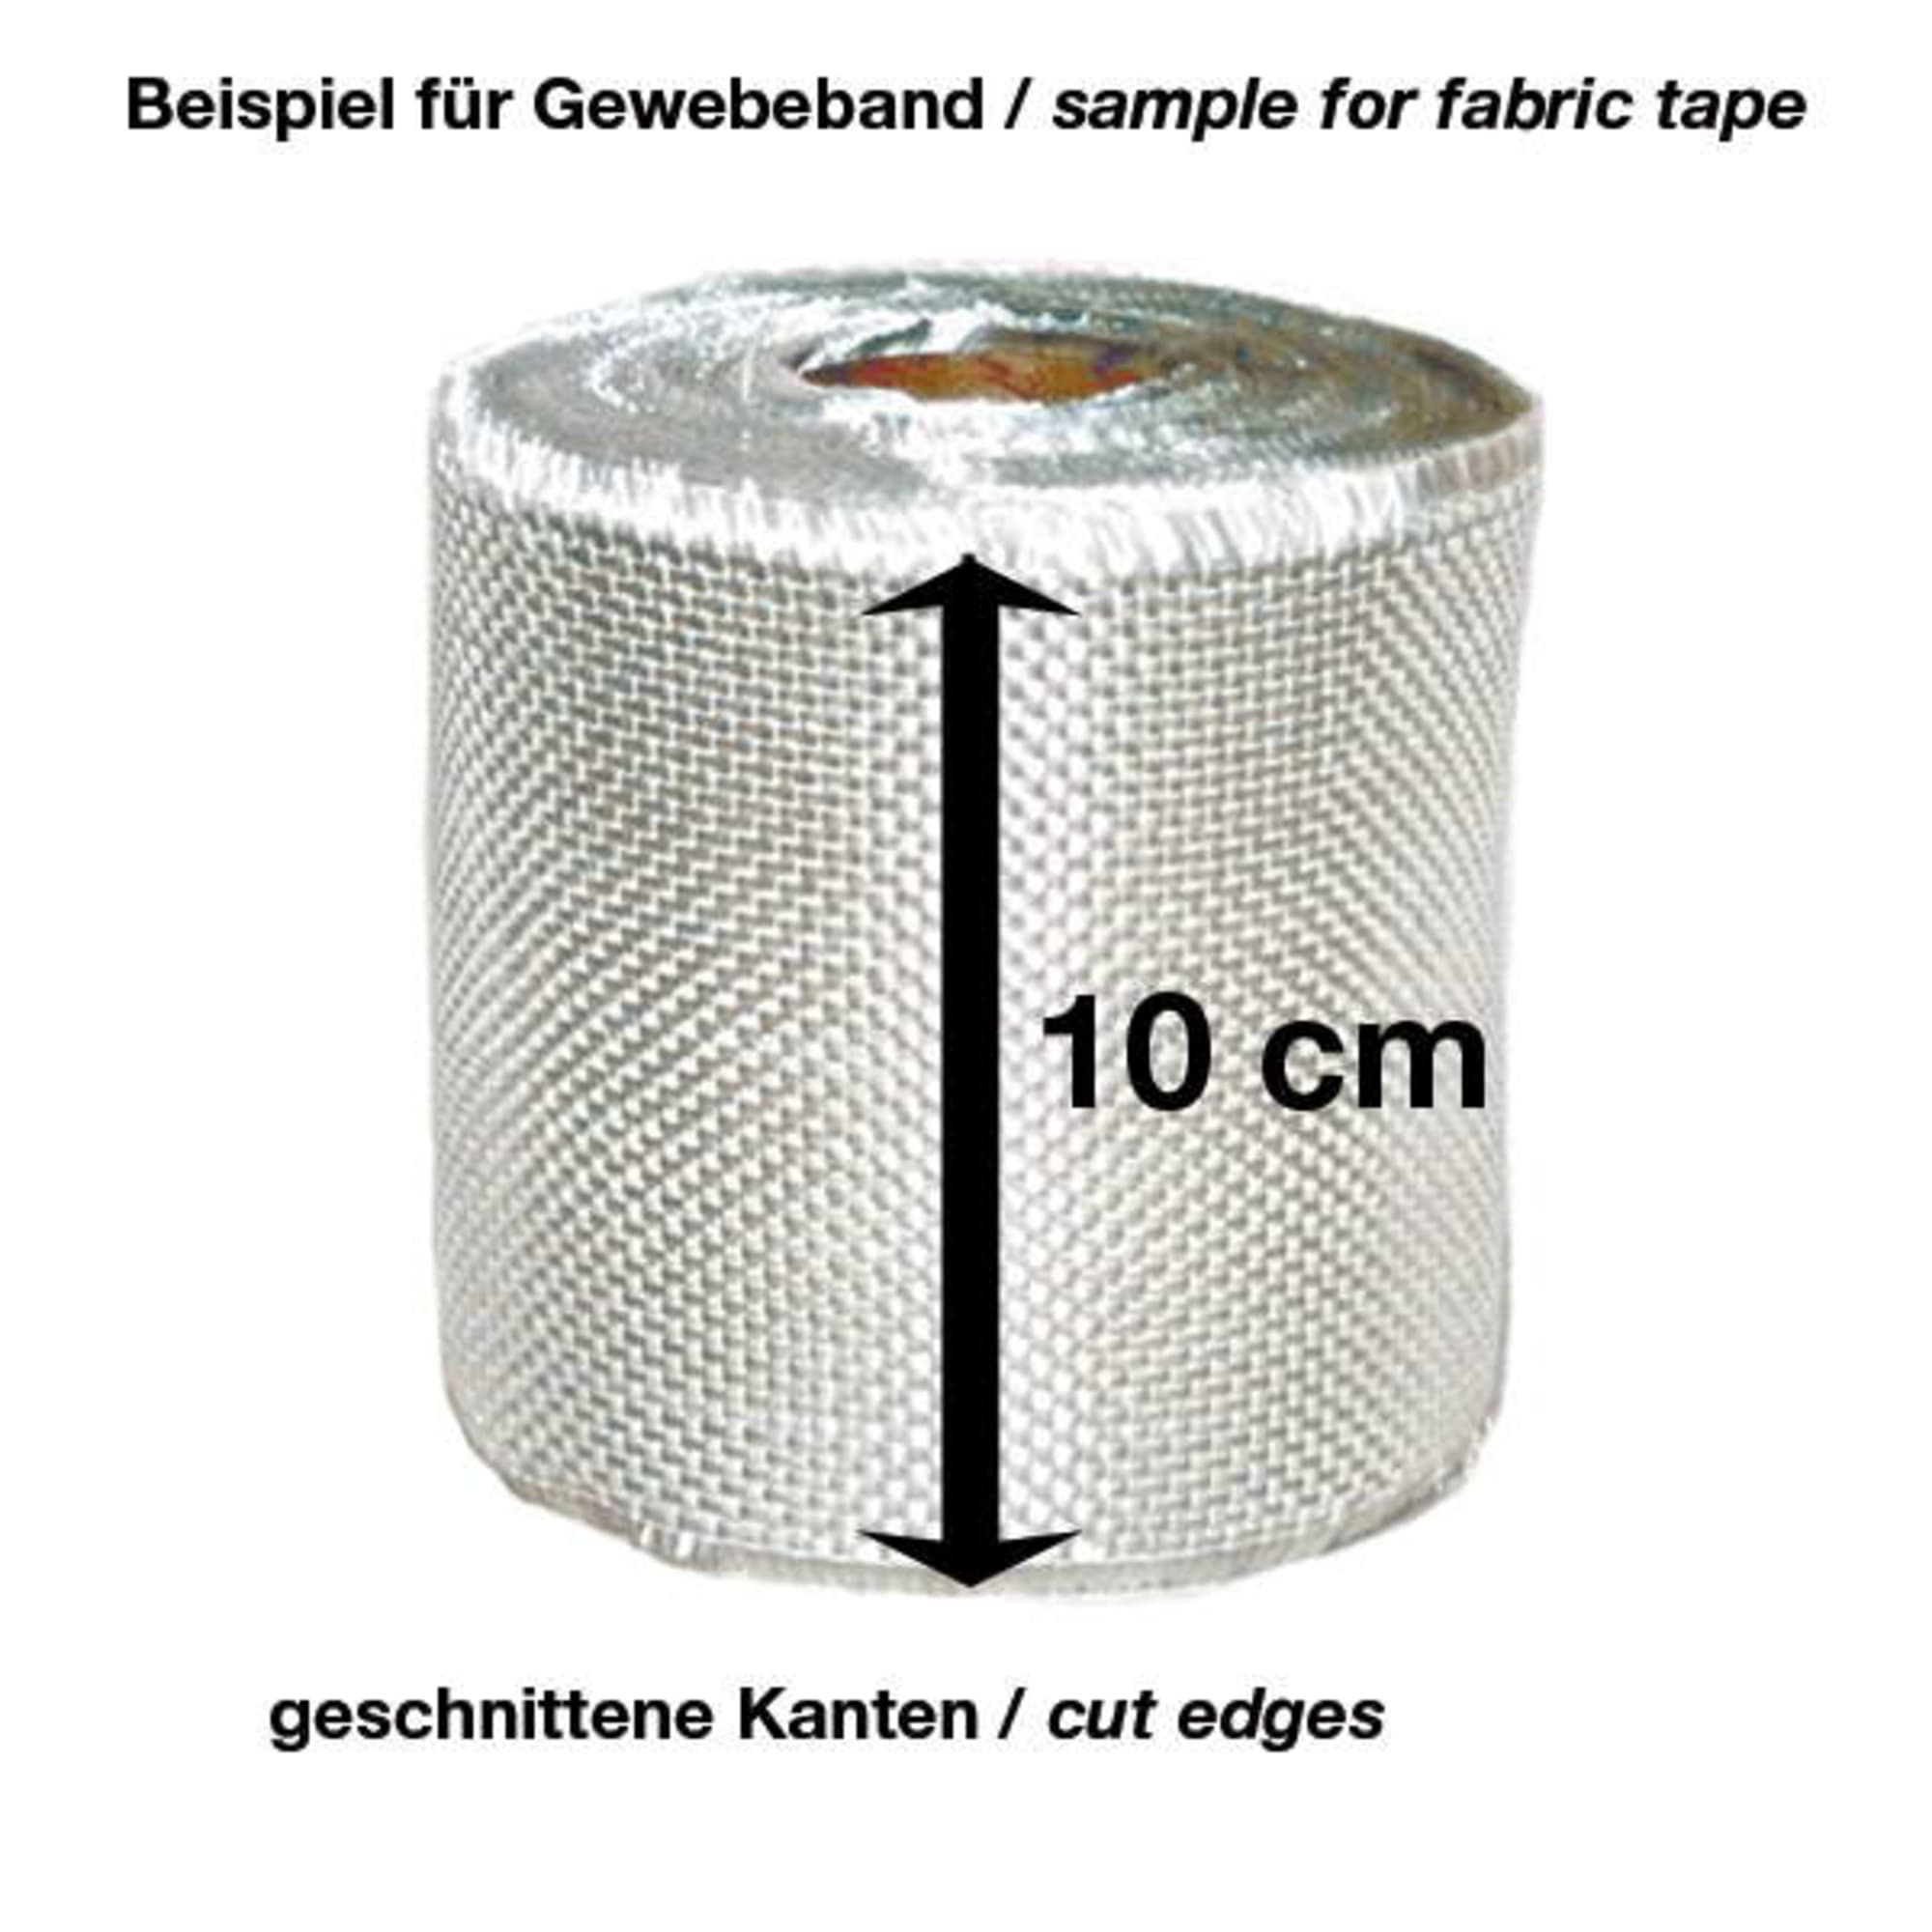 Glass fabric tape 49 g/m² (Interglas 02037, finish FE 600/800, plain weave) 10 cm, image 3